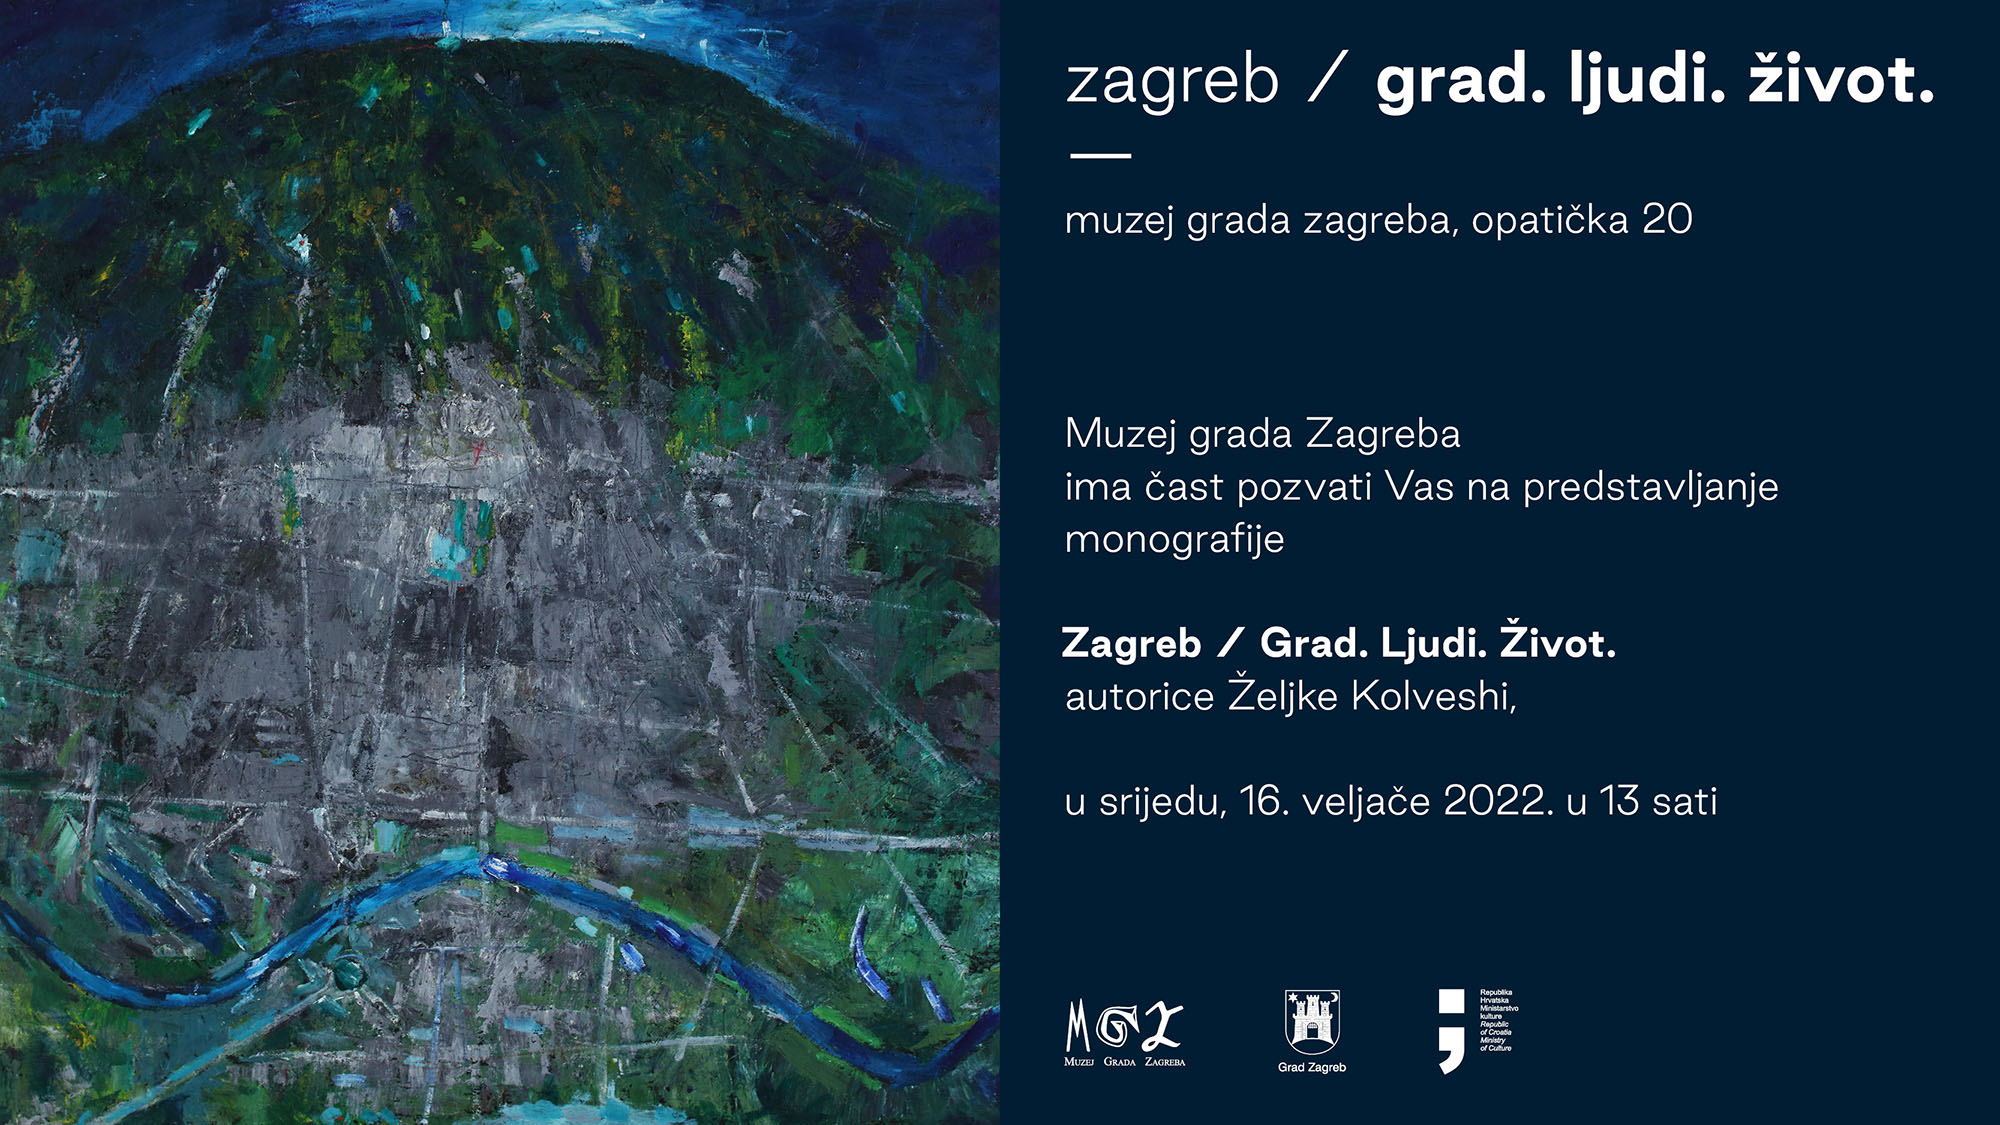 Predstavljena je monografija Zagreb / Grad. Ljudi. Život